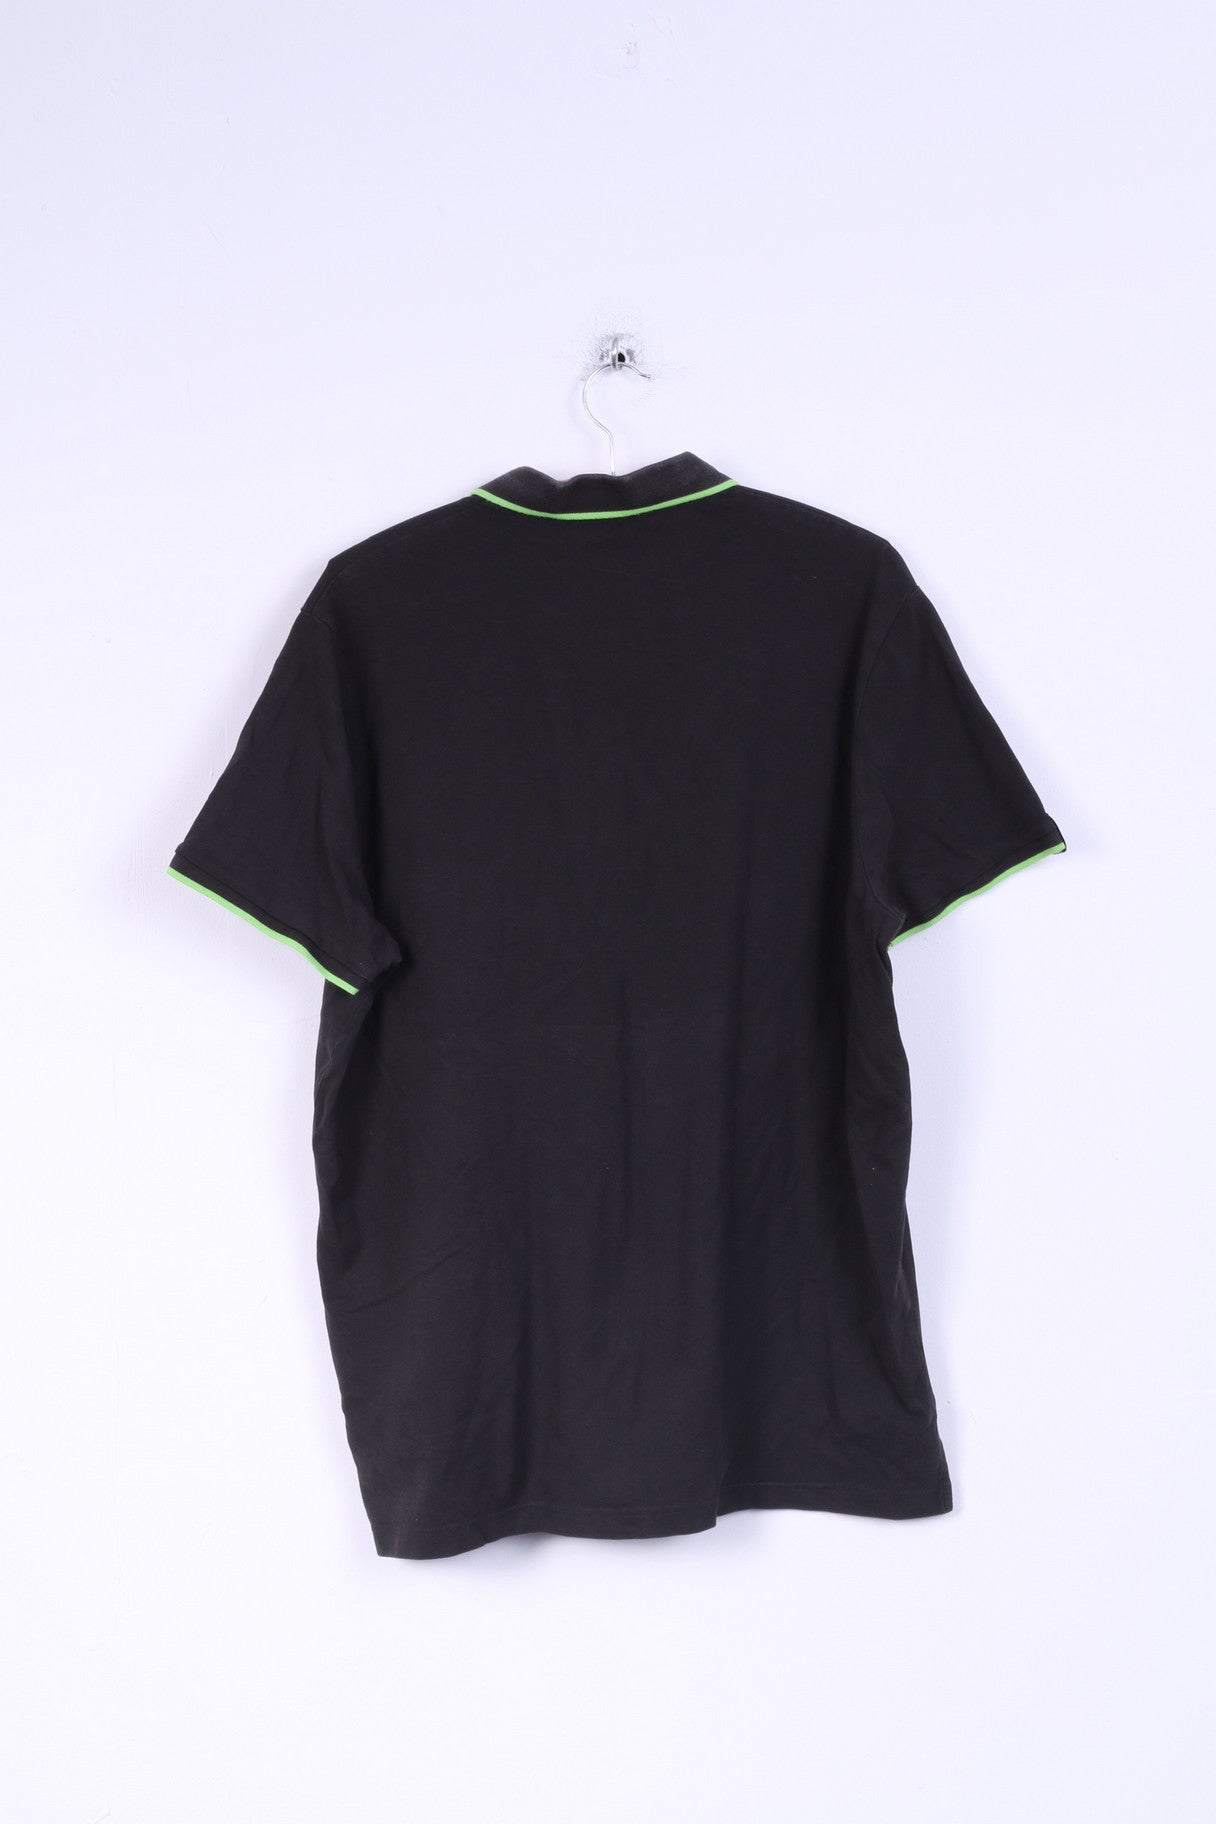 Puma Mens XL Polo Shirt Black Short Sleeve Sport